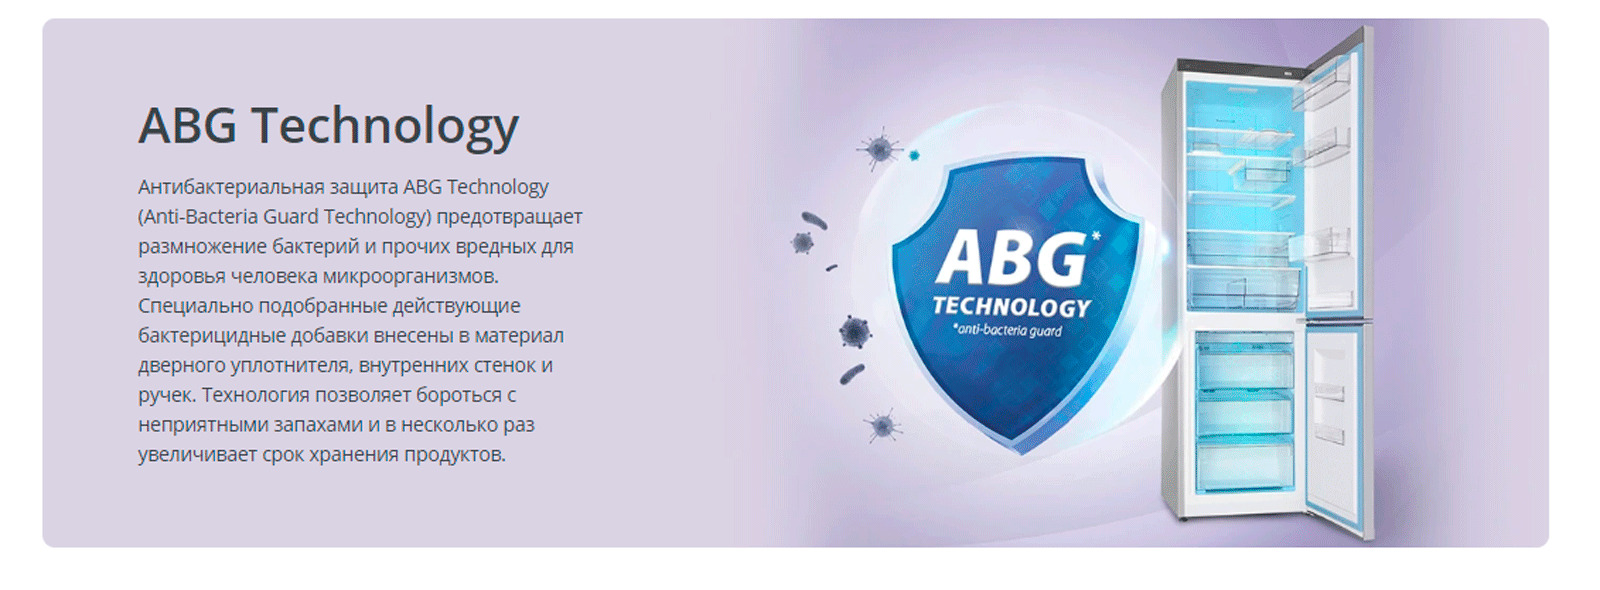 AbG Technology